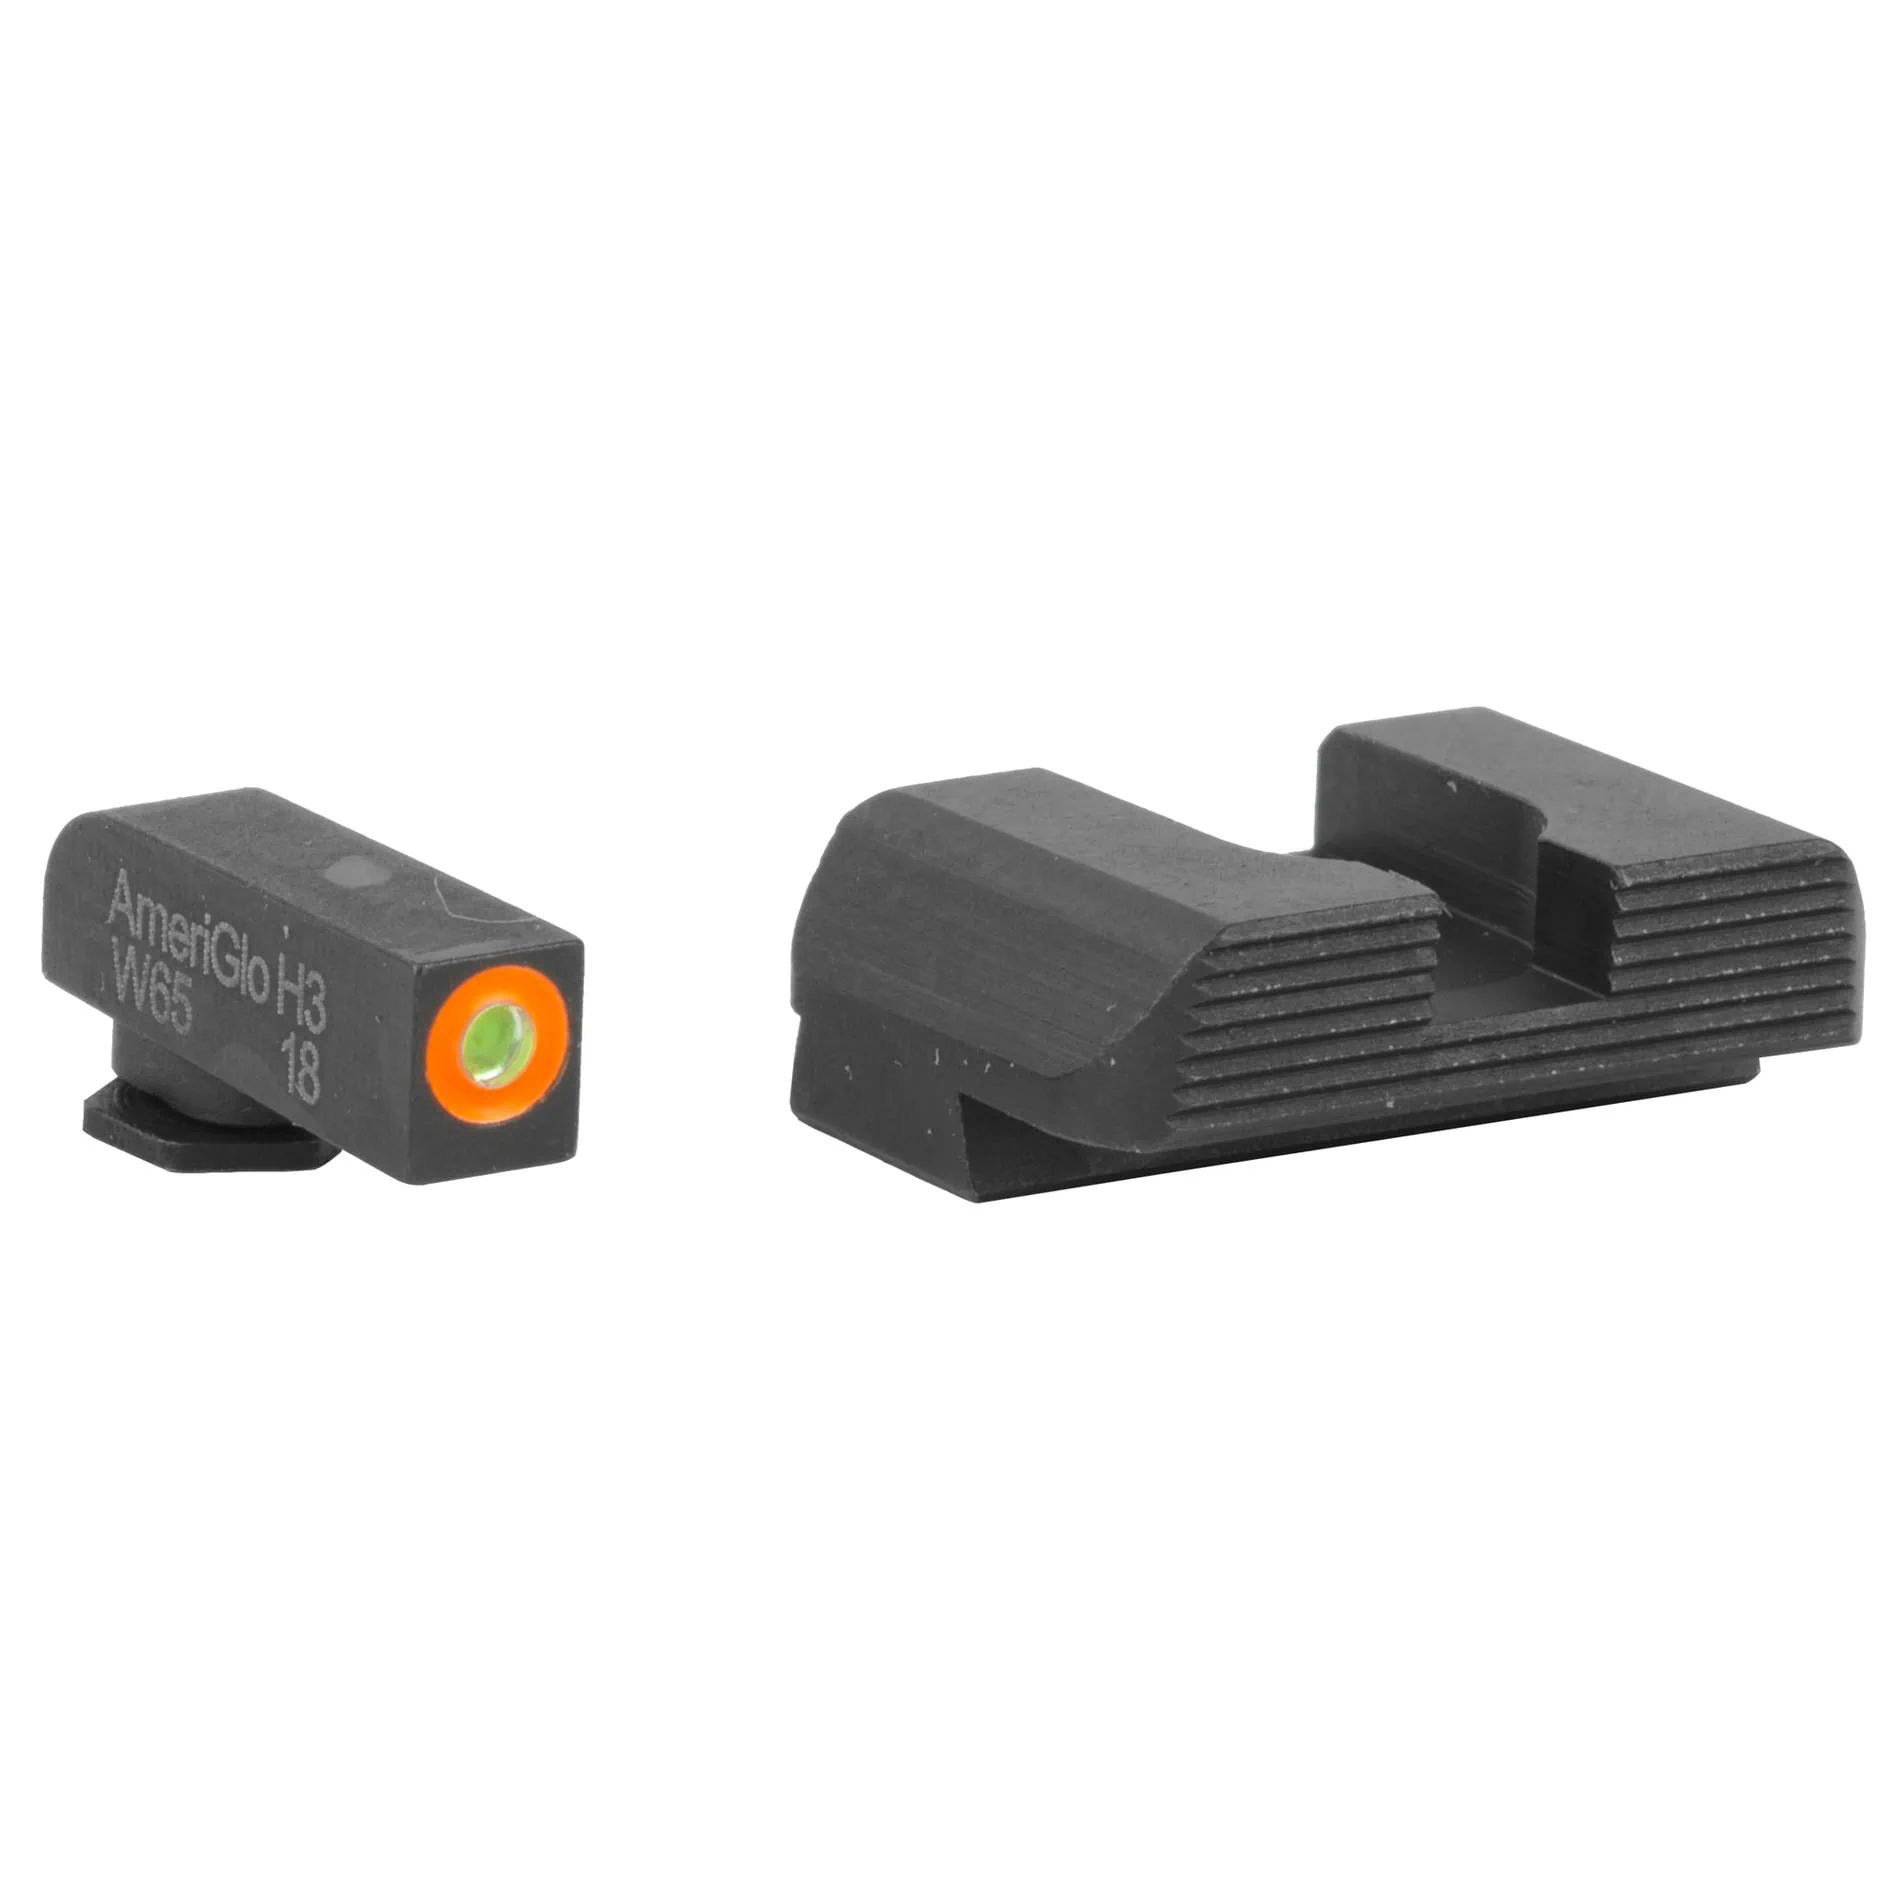 AmeriGlo Protector Tritium Iron Sight Set for Glock 42/43/43X/48